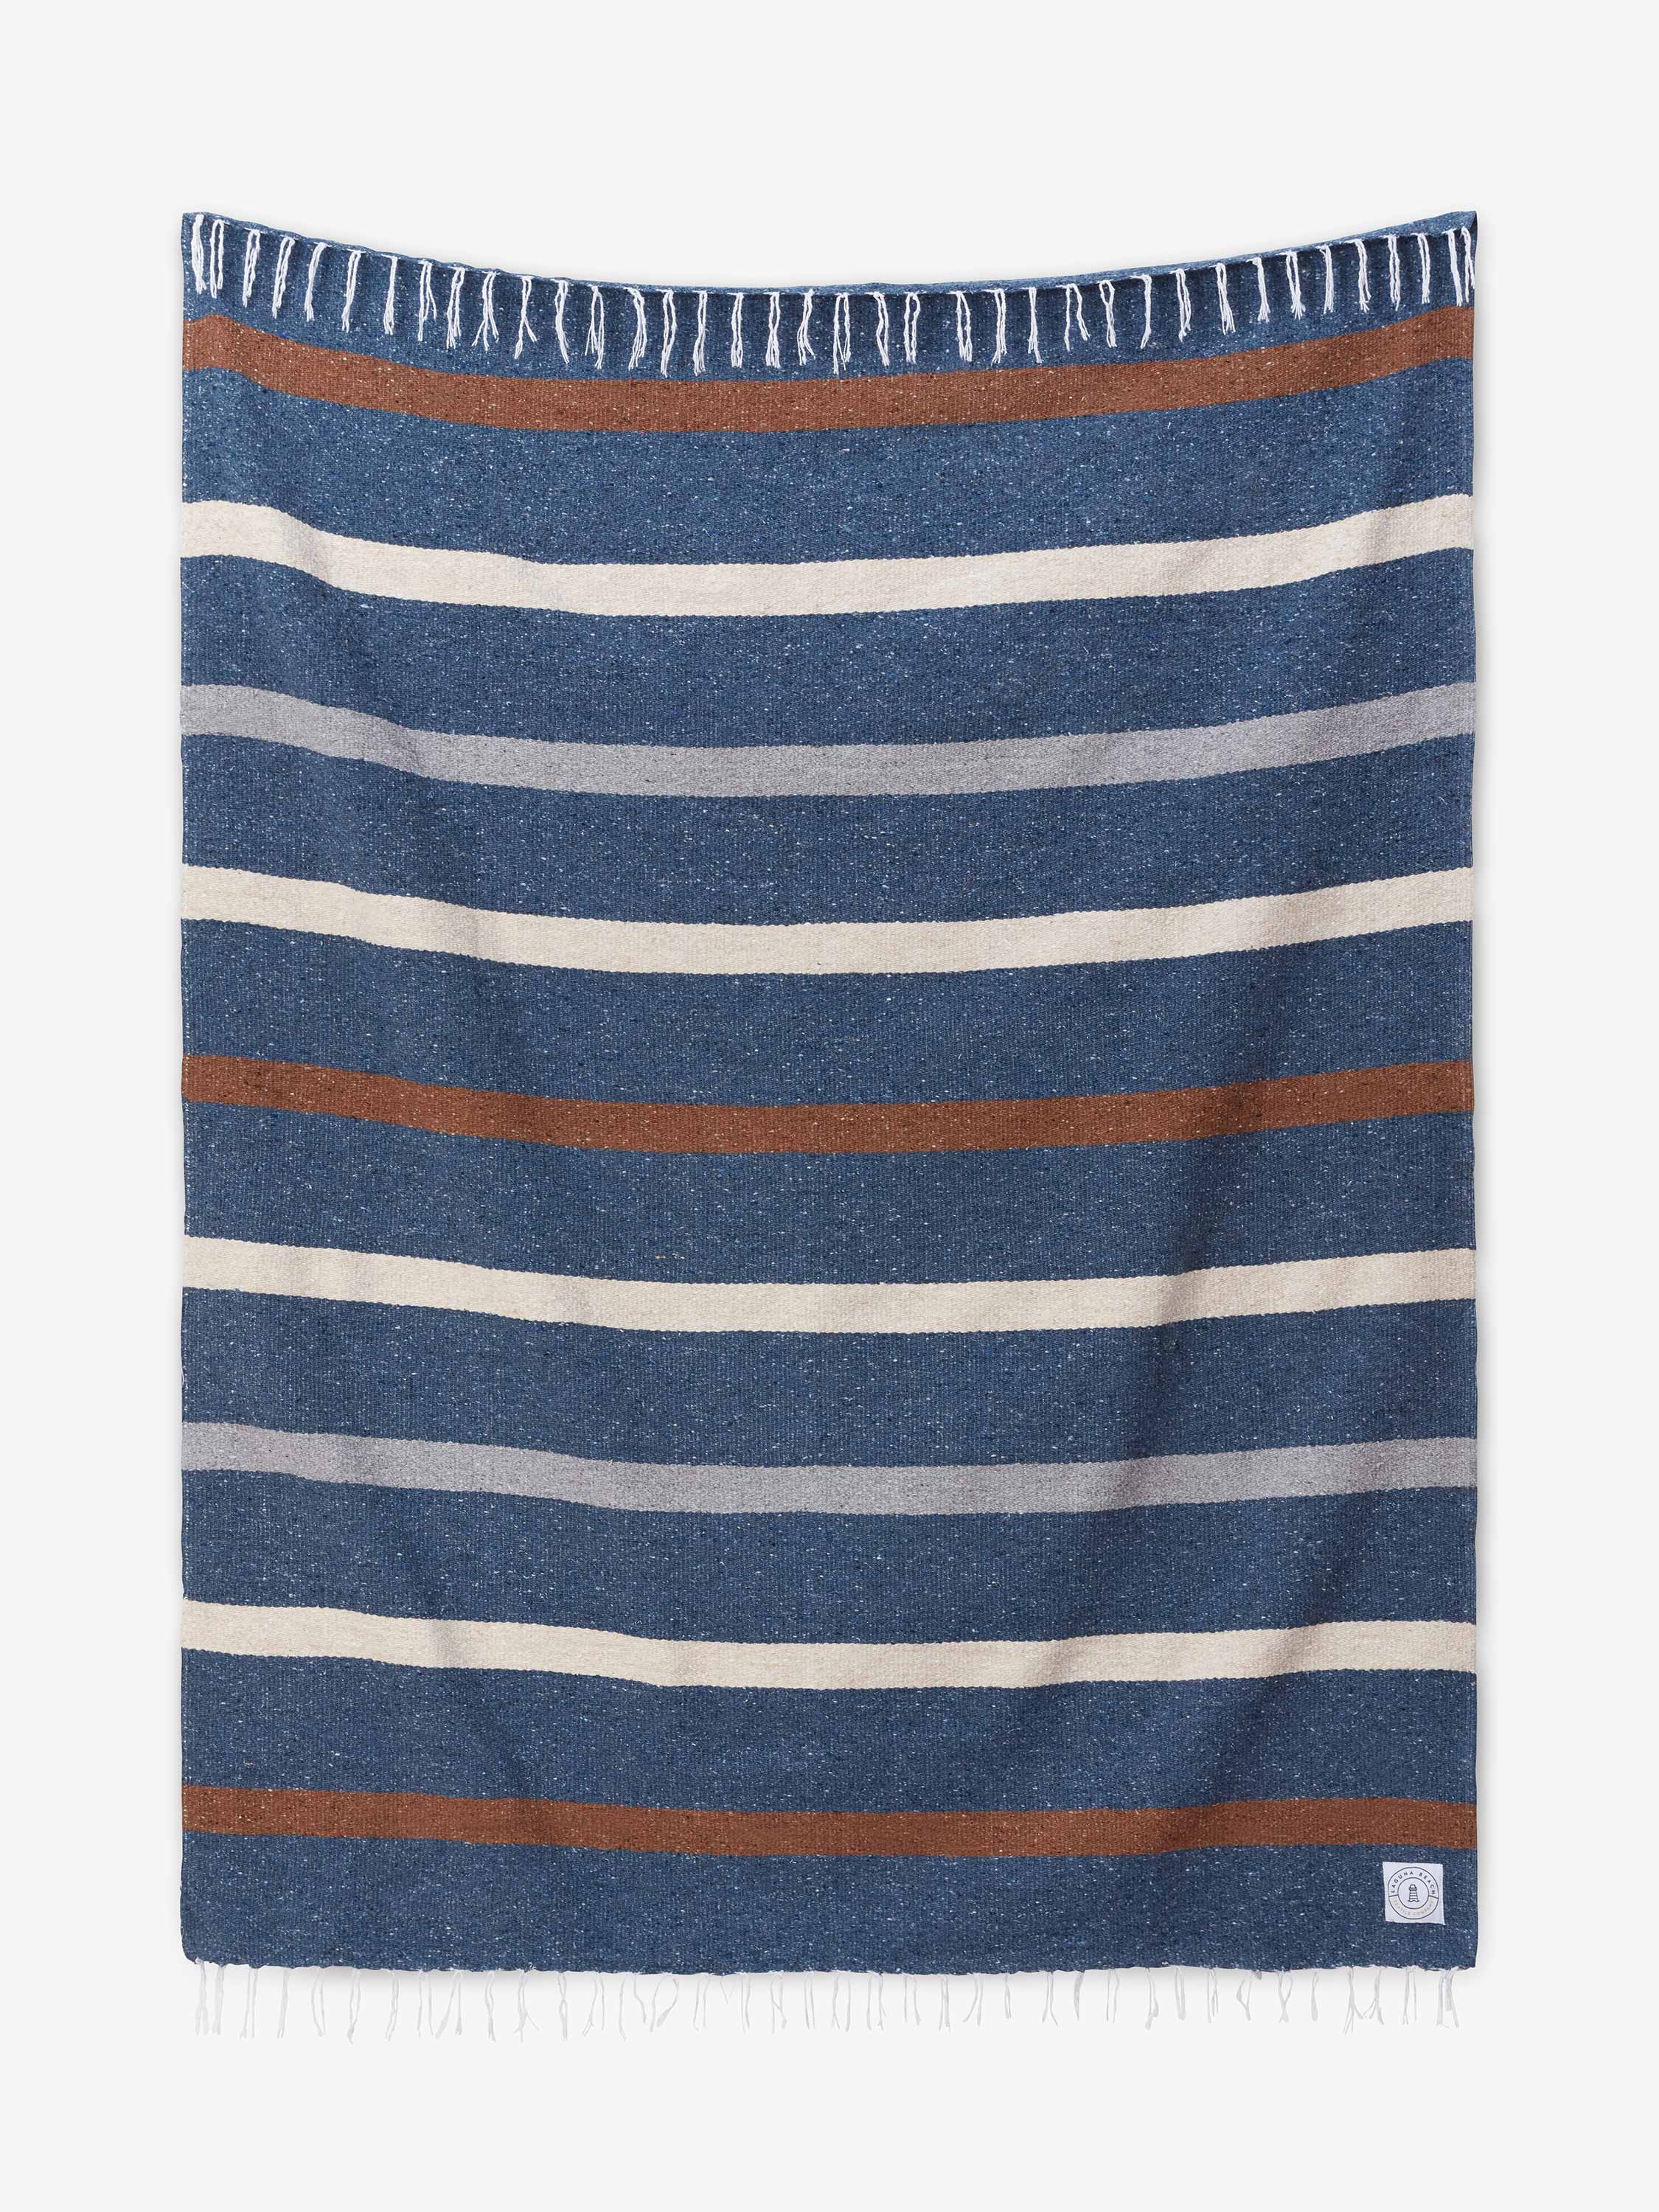 Slate Blue Riviera Mexican Blanket by Laguna Beach Textile Company